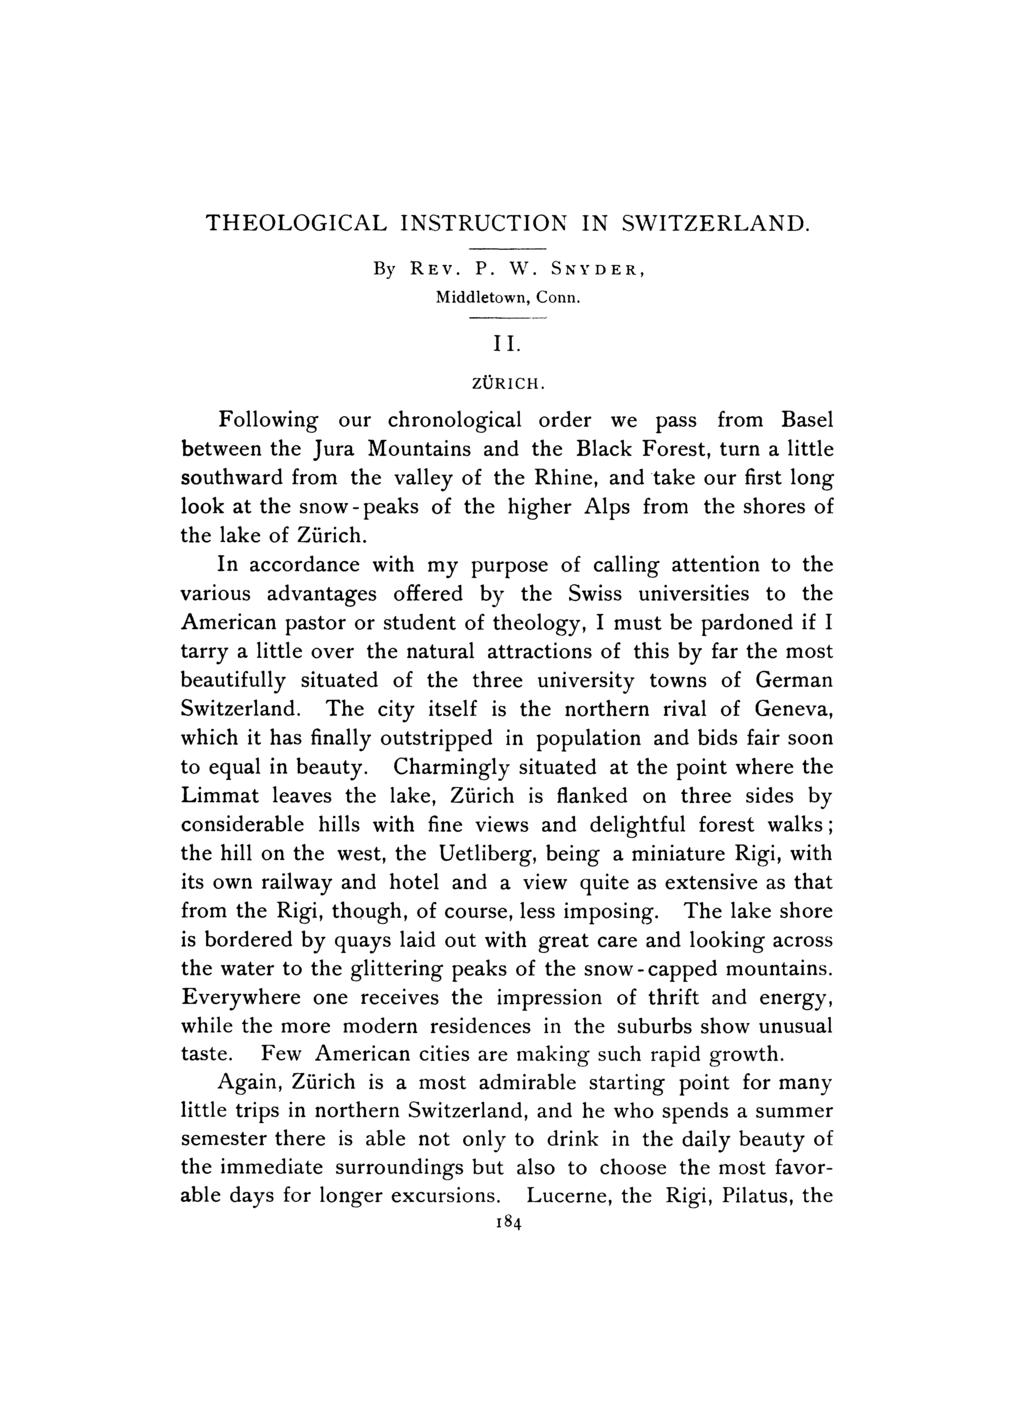 THEOLOGICAL INSTRUCTION IN SWITZERLAND. By REv. P. W. SNYDER, Middletown, Conn. II. ZURICH.